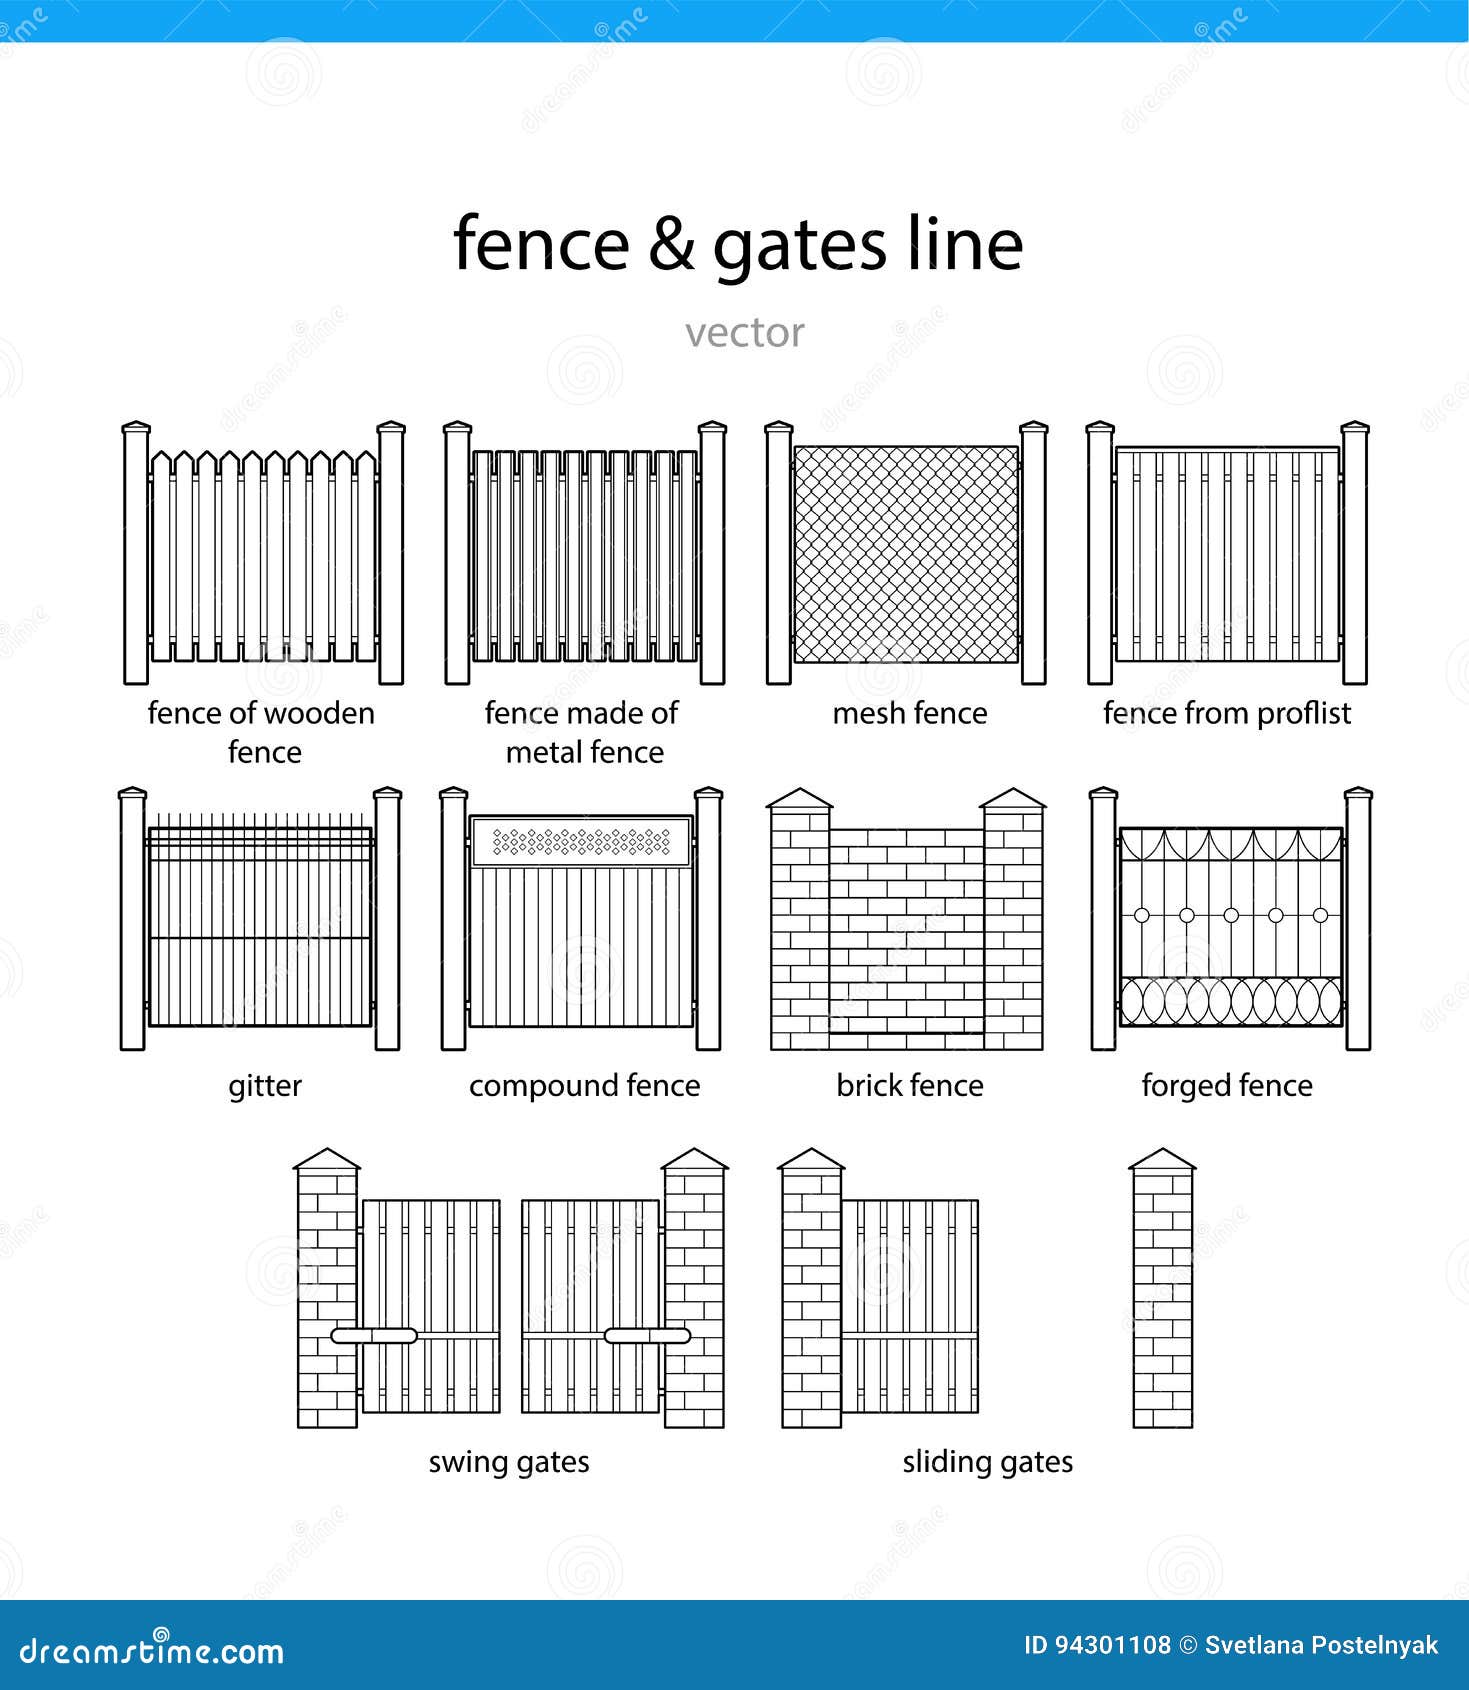 Fence Company Near Me